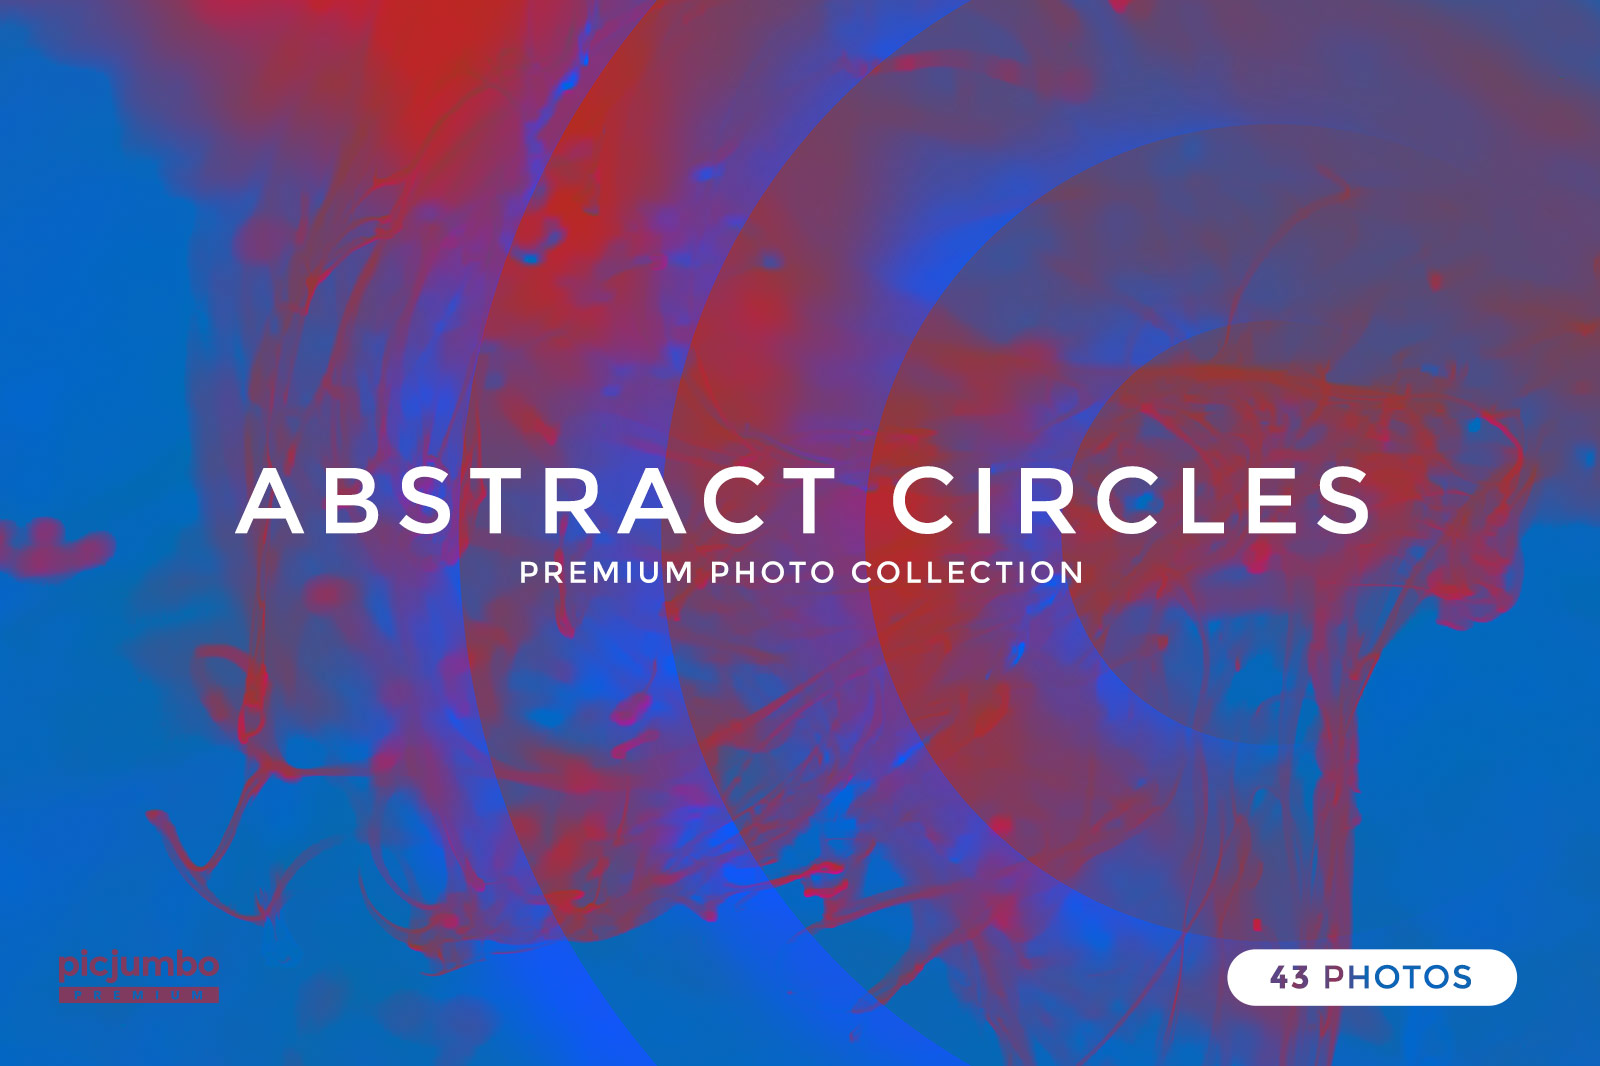 Abstract Circles Stock Photo Collection